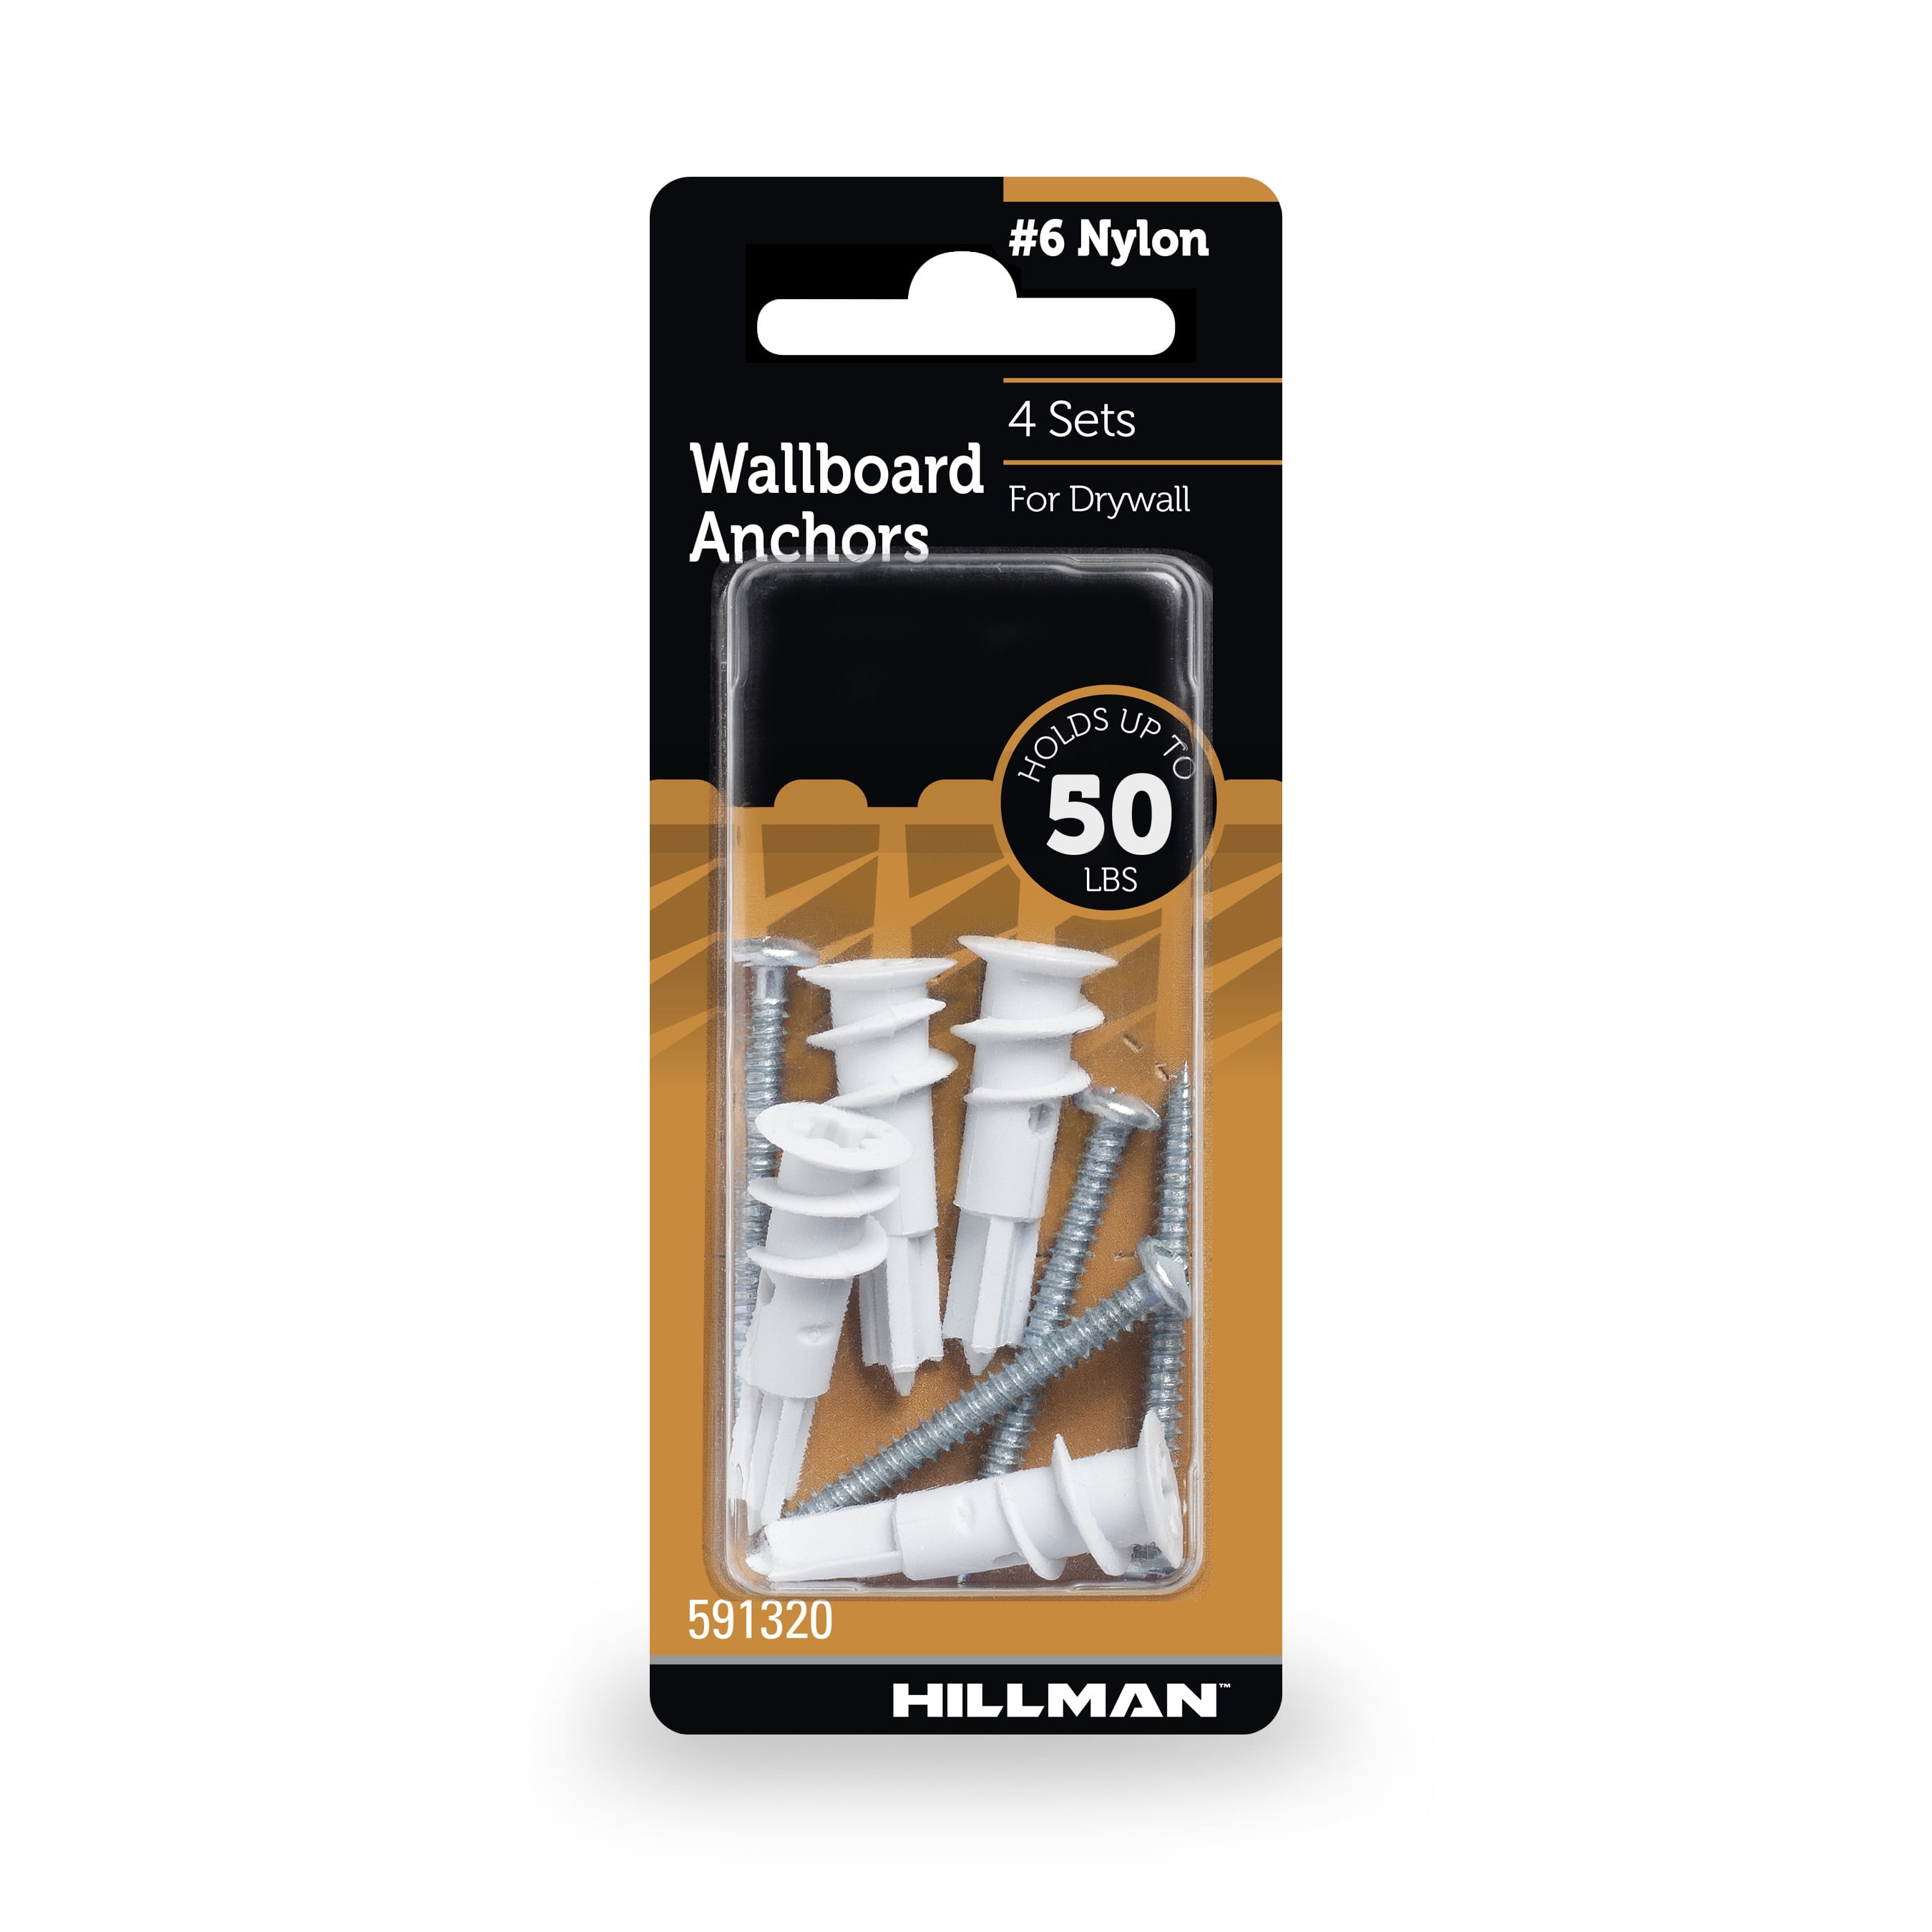 Hillman Drywall Nylon Anchor Screws, Pan Head Phillips Screw, #6, 50lbs, 4 Sets